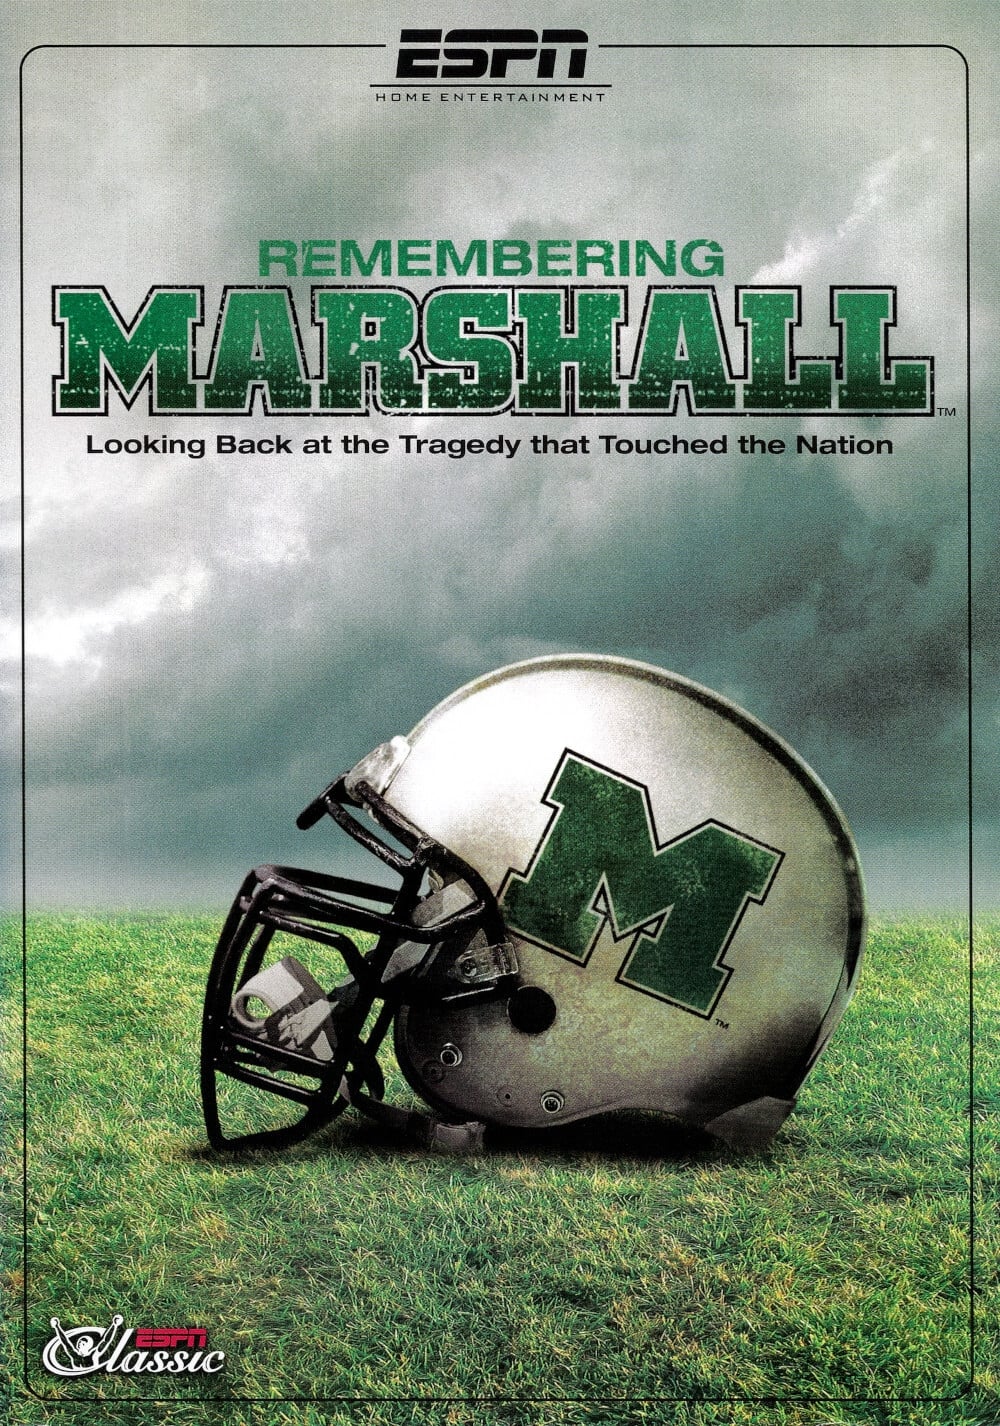 Remembering Marshall